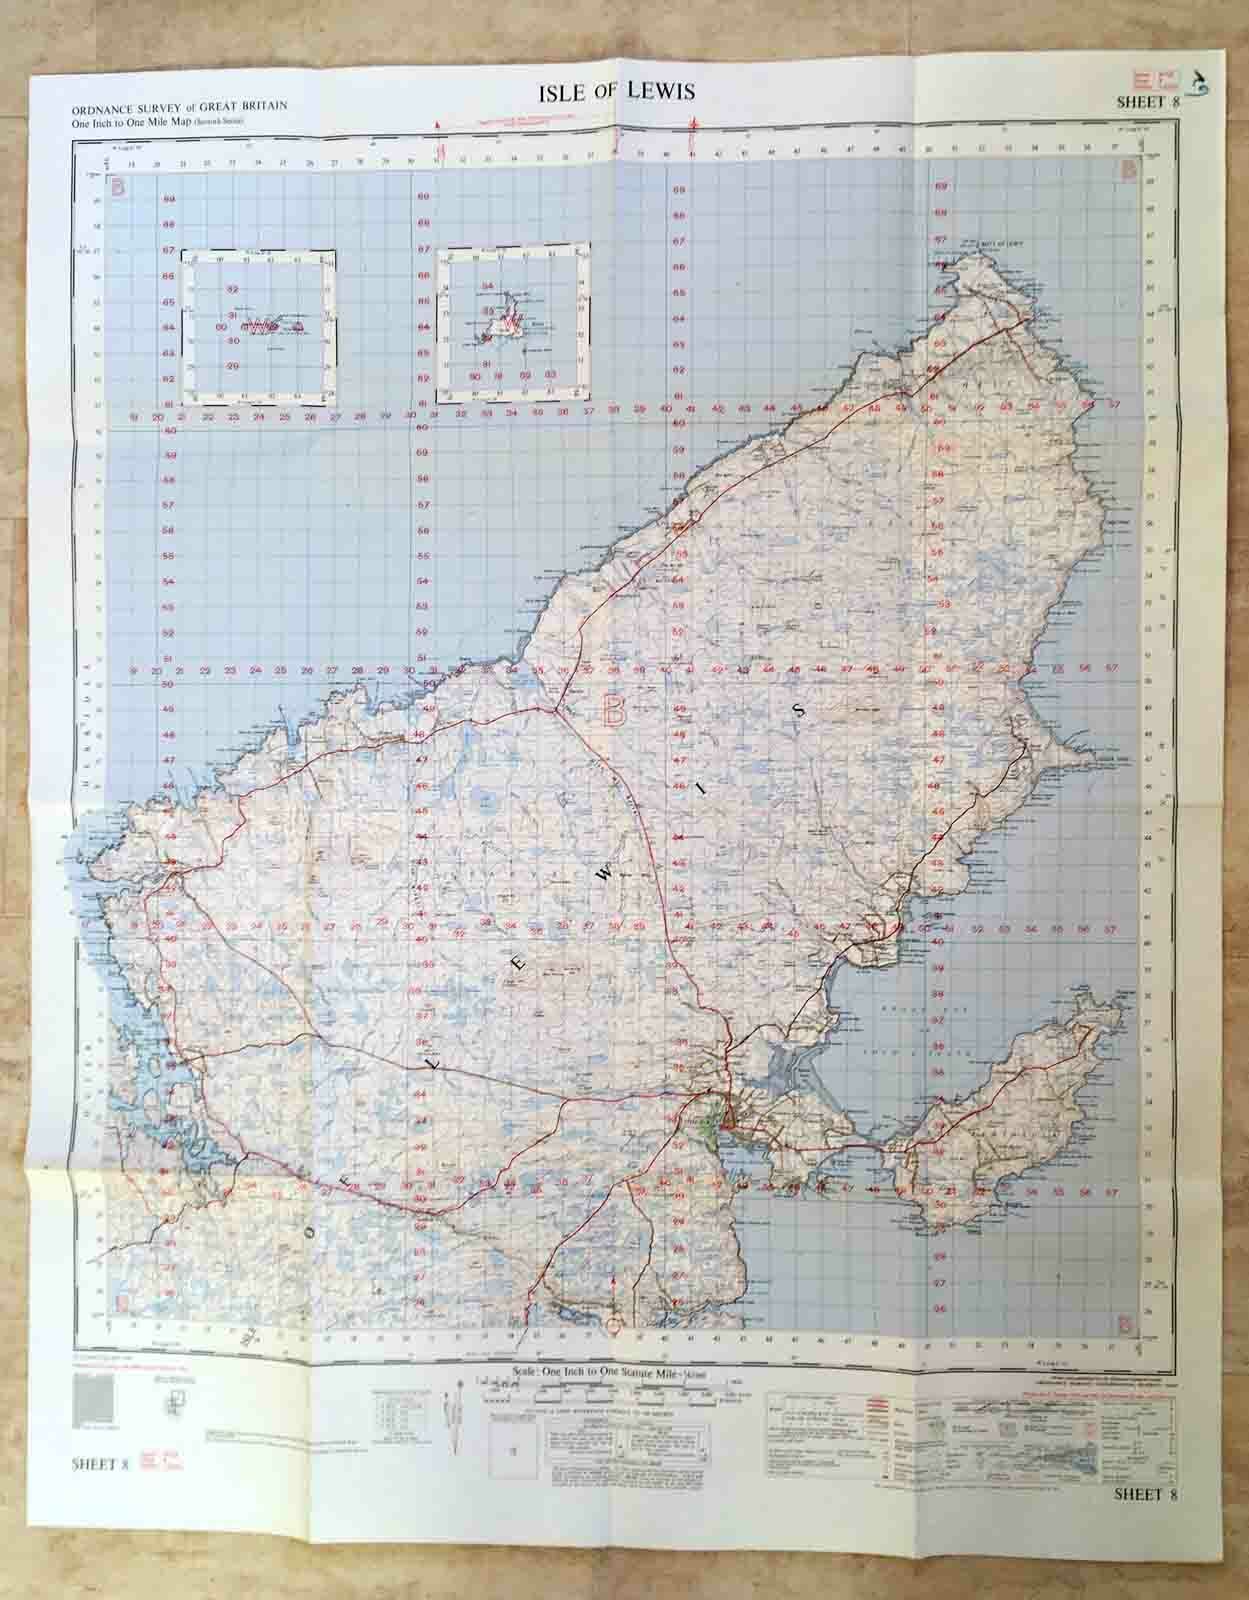 Isle of Lewis OS/Ordnance Survey Map 1 inch - 1 mile Sheet 8 1961